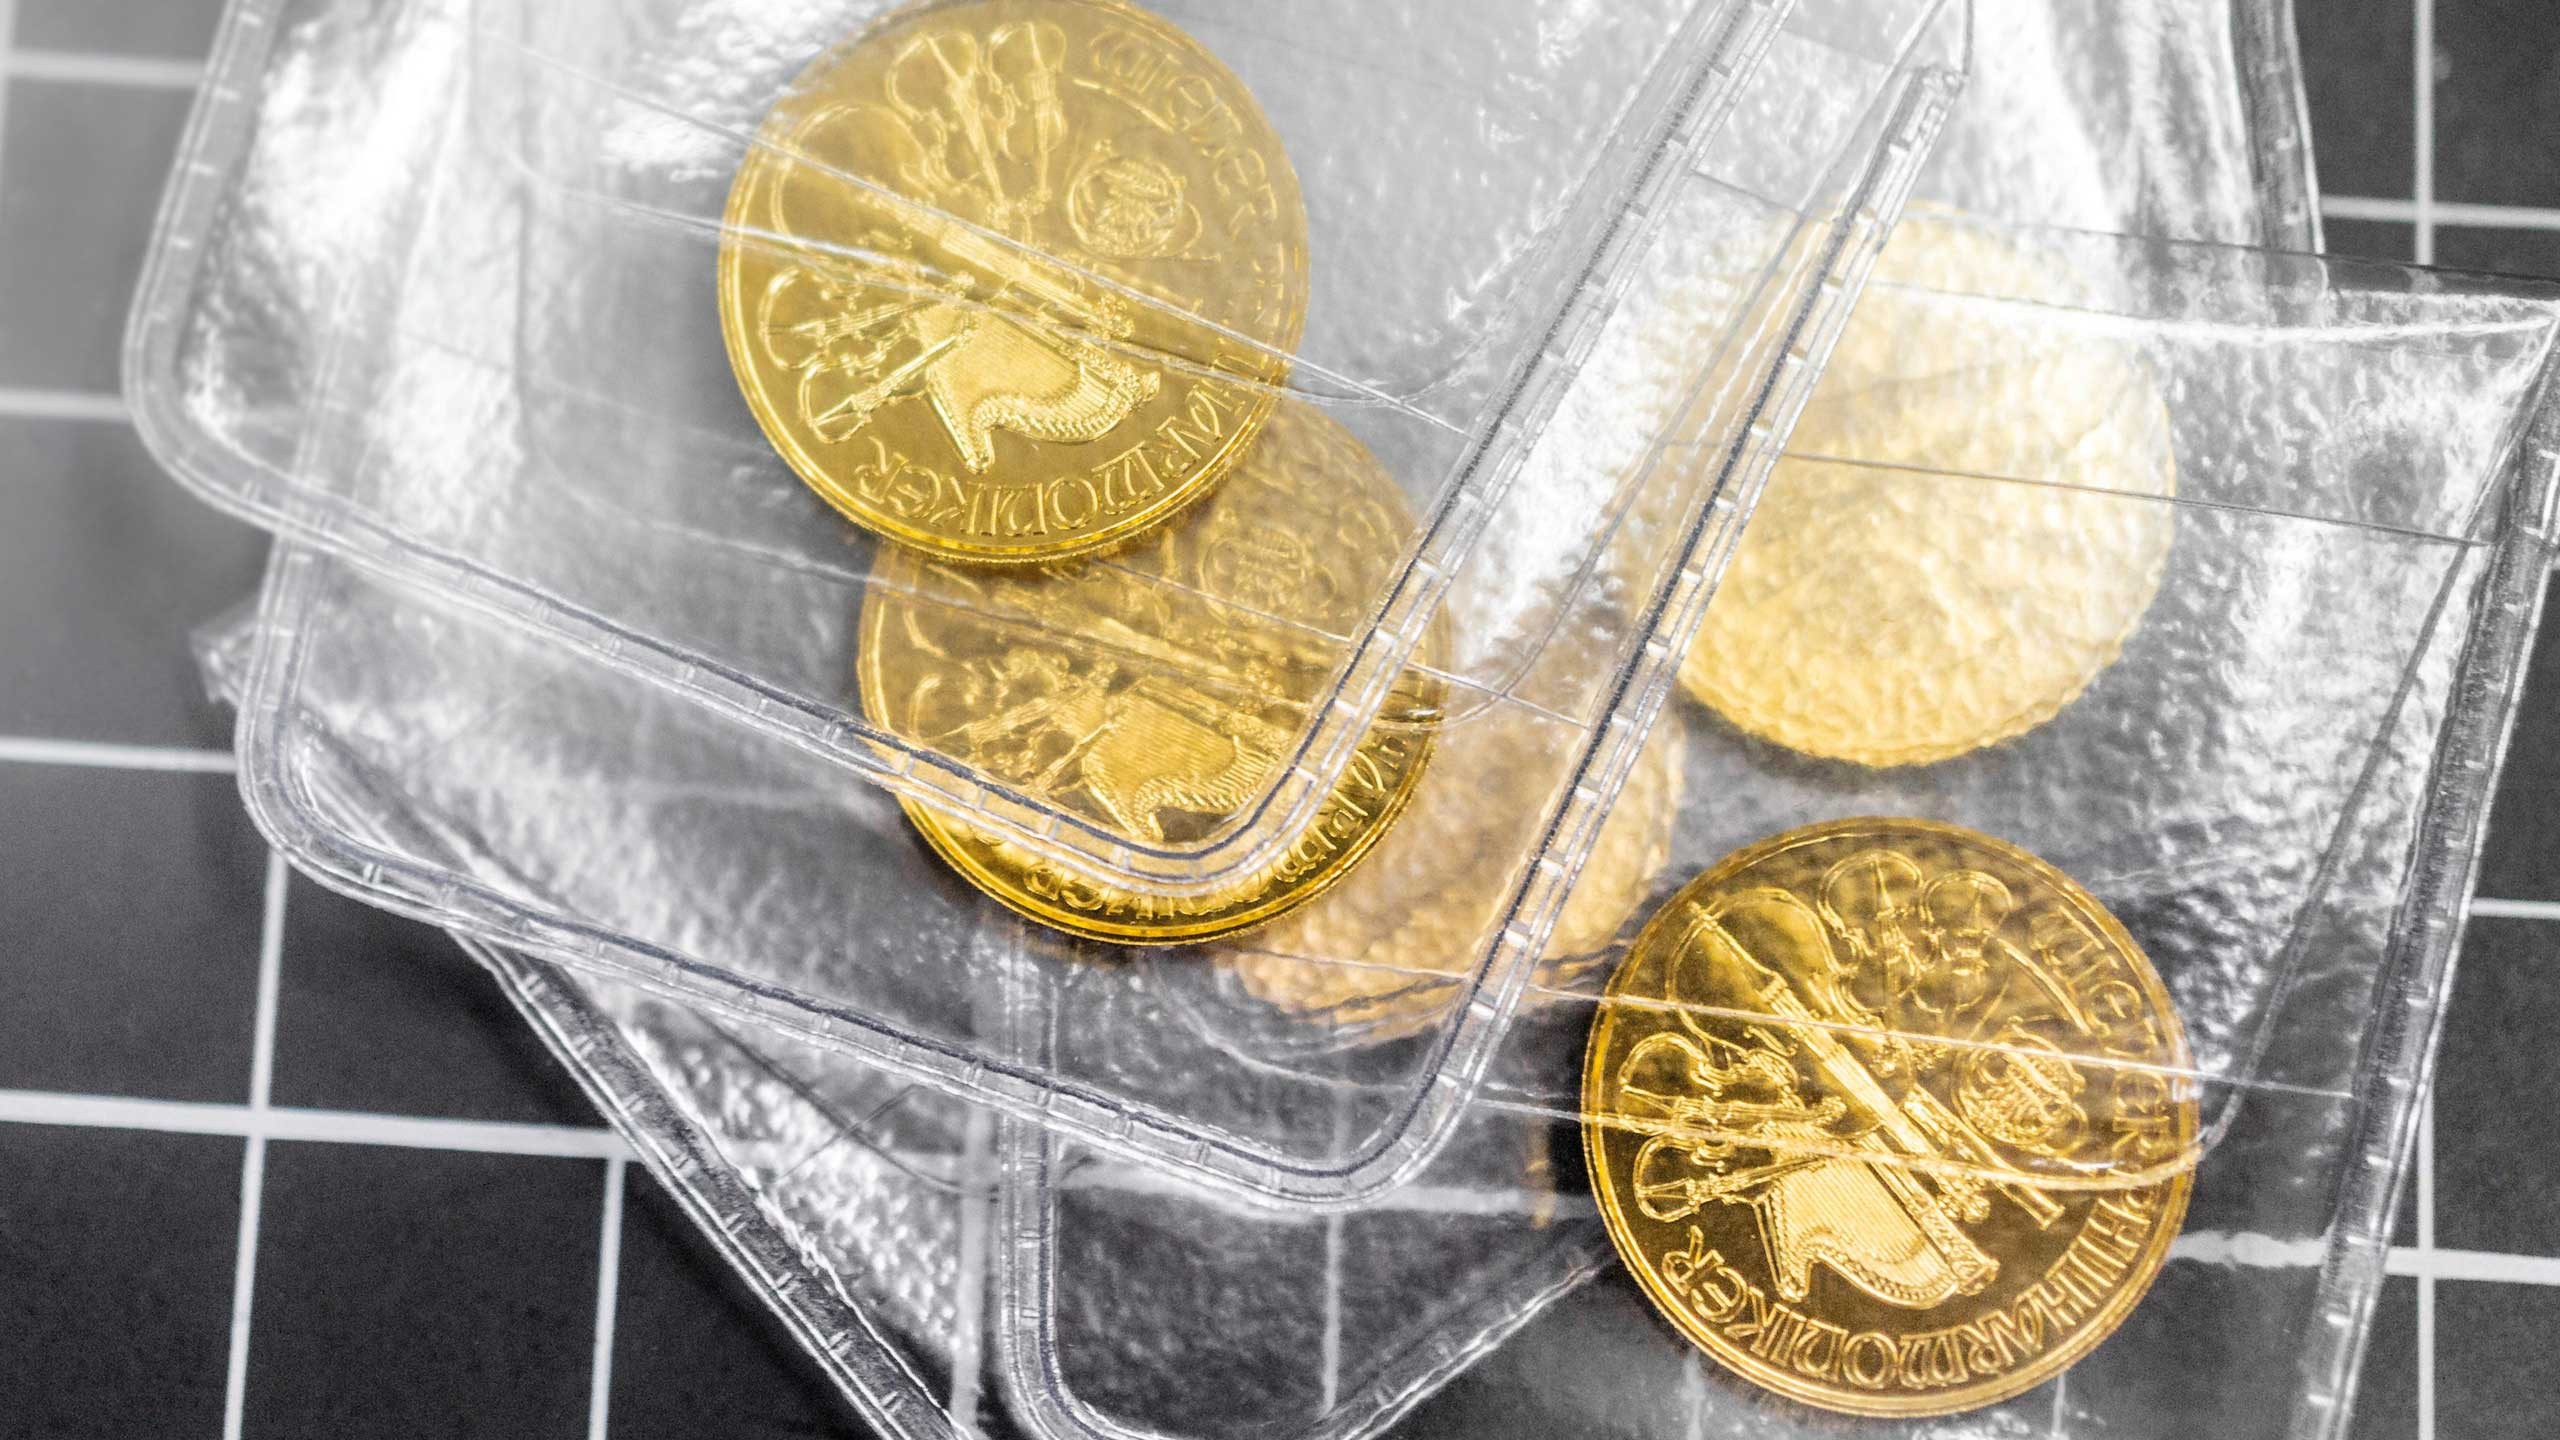 Vienna Philharmonic coin in plastic case